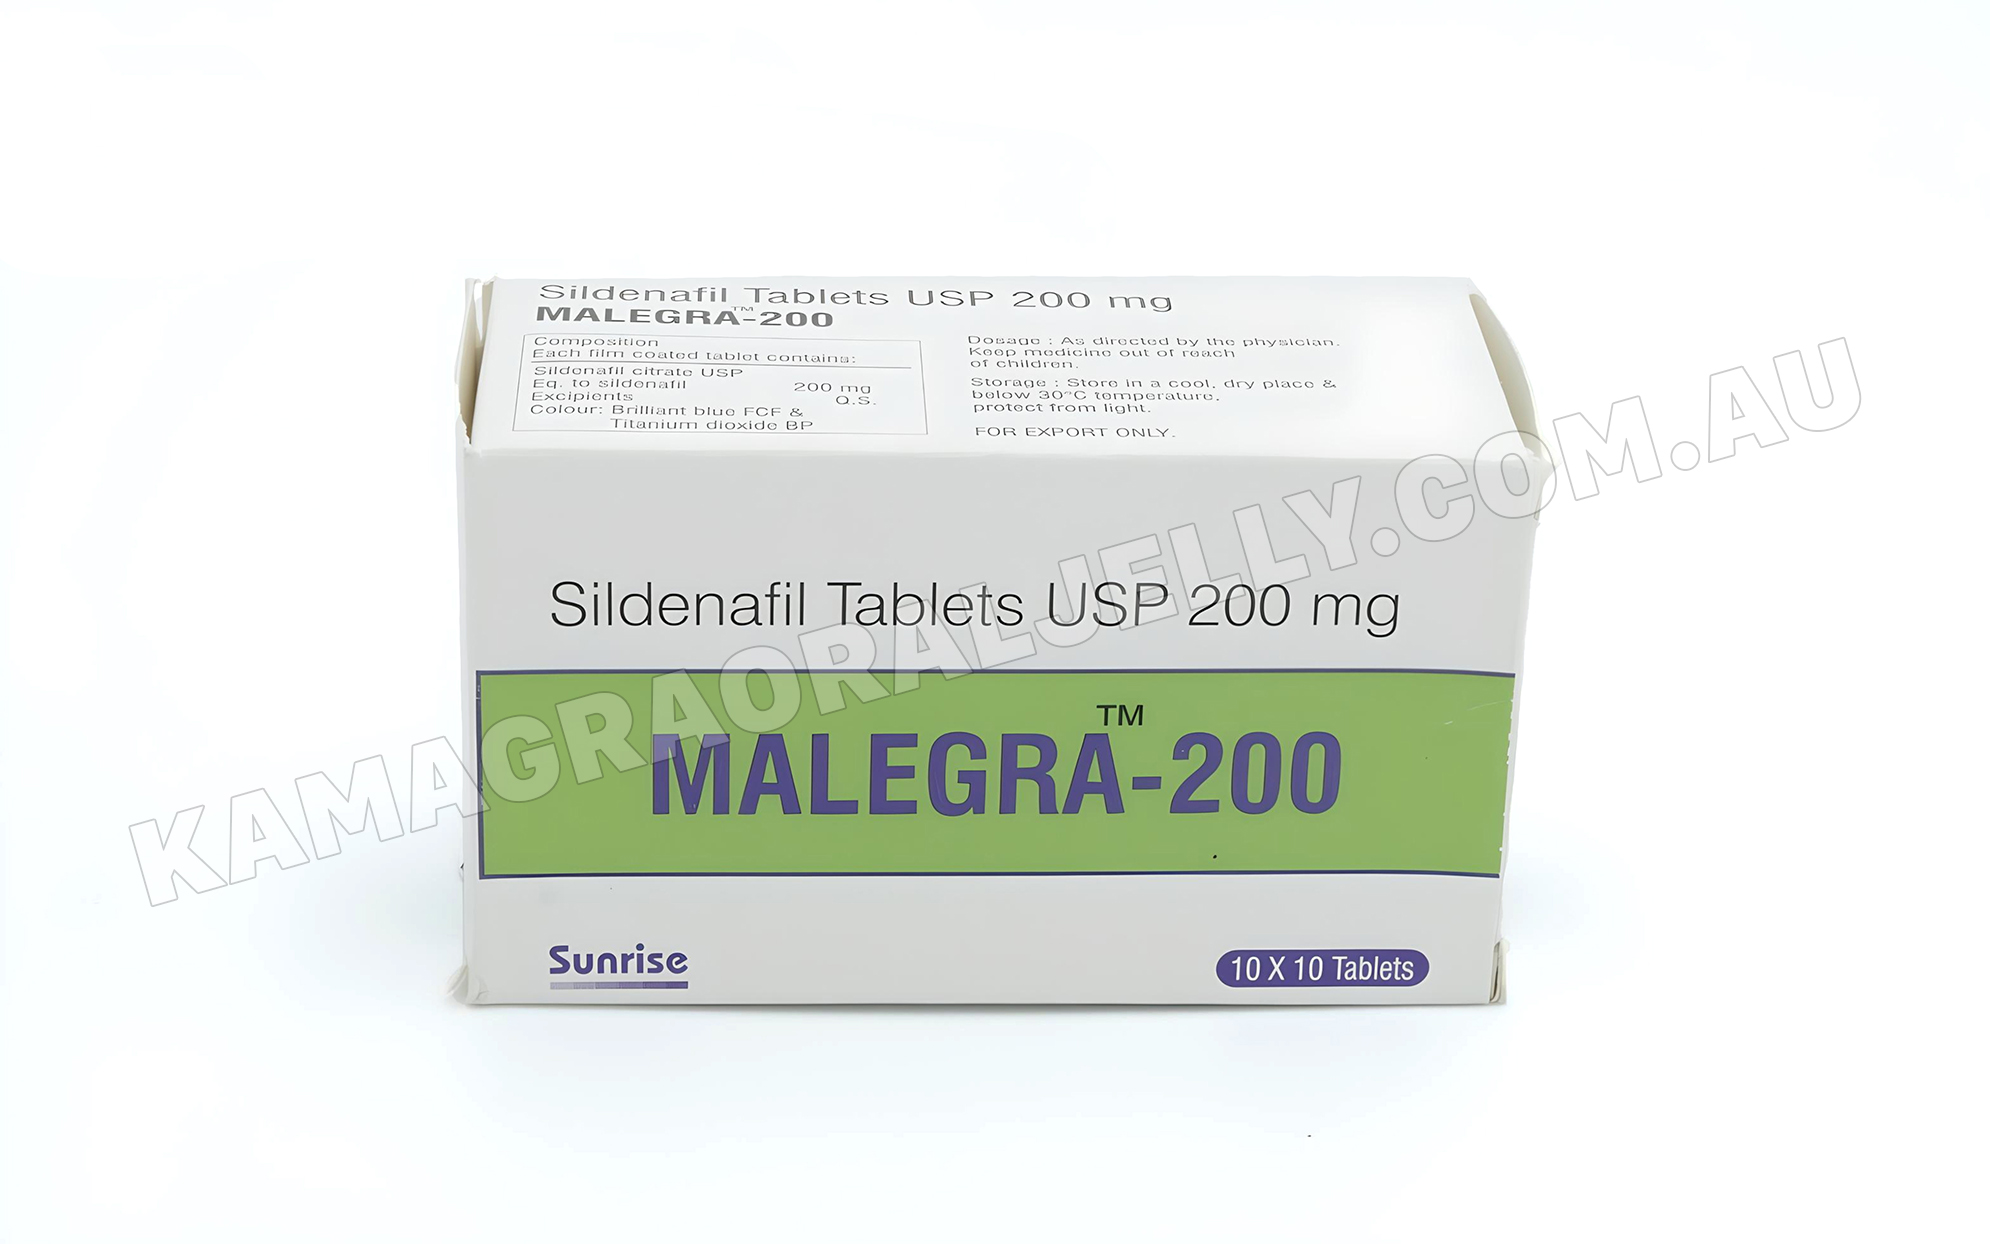 Storage Guidelines Malegra 200 mg